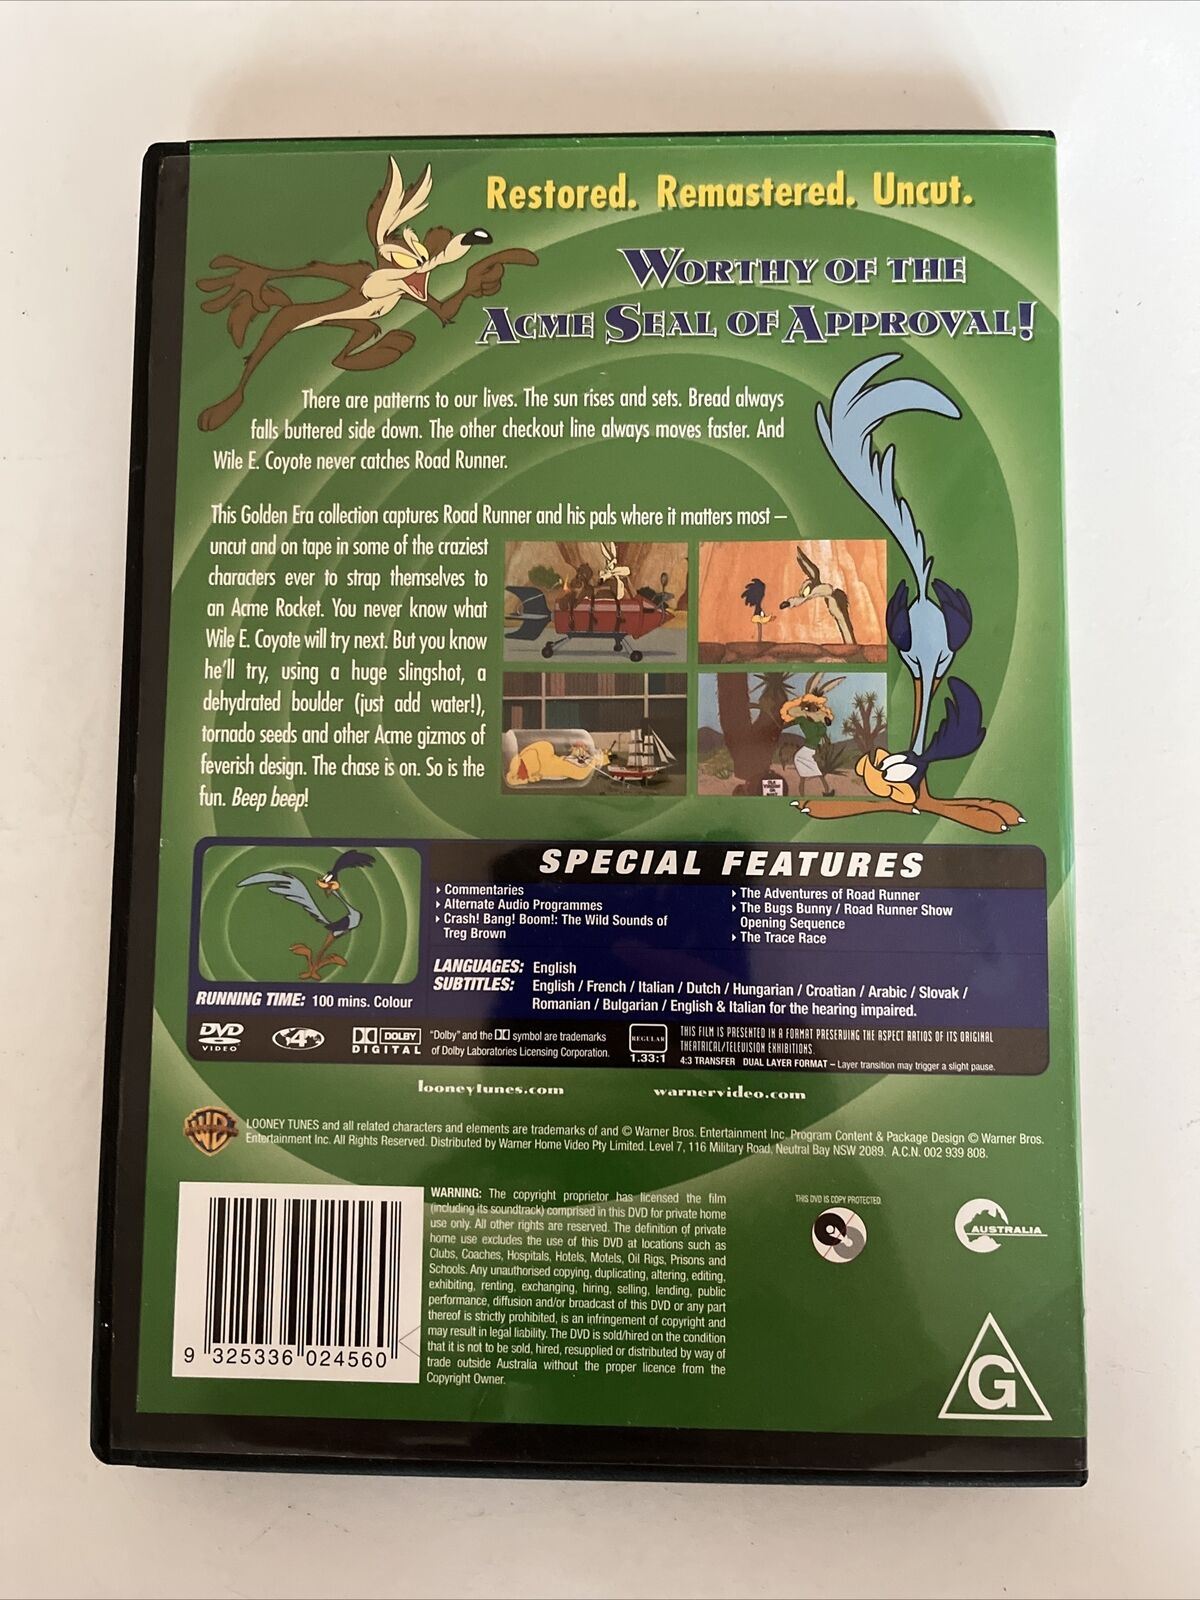 Looney Tunes Collection Best of Road Runner : Vol 1 (DVD) Region 4